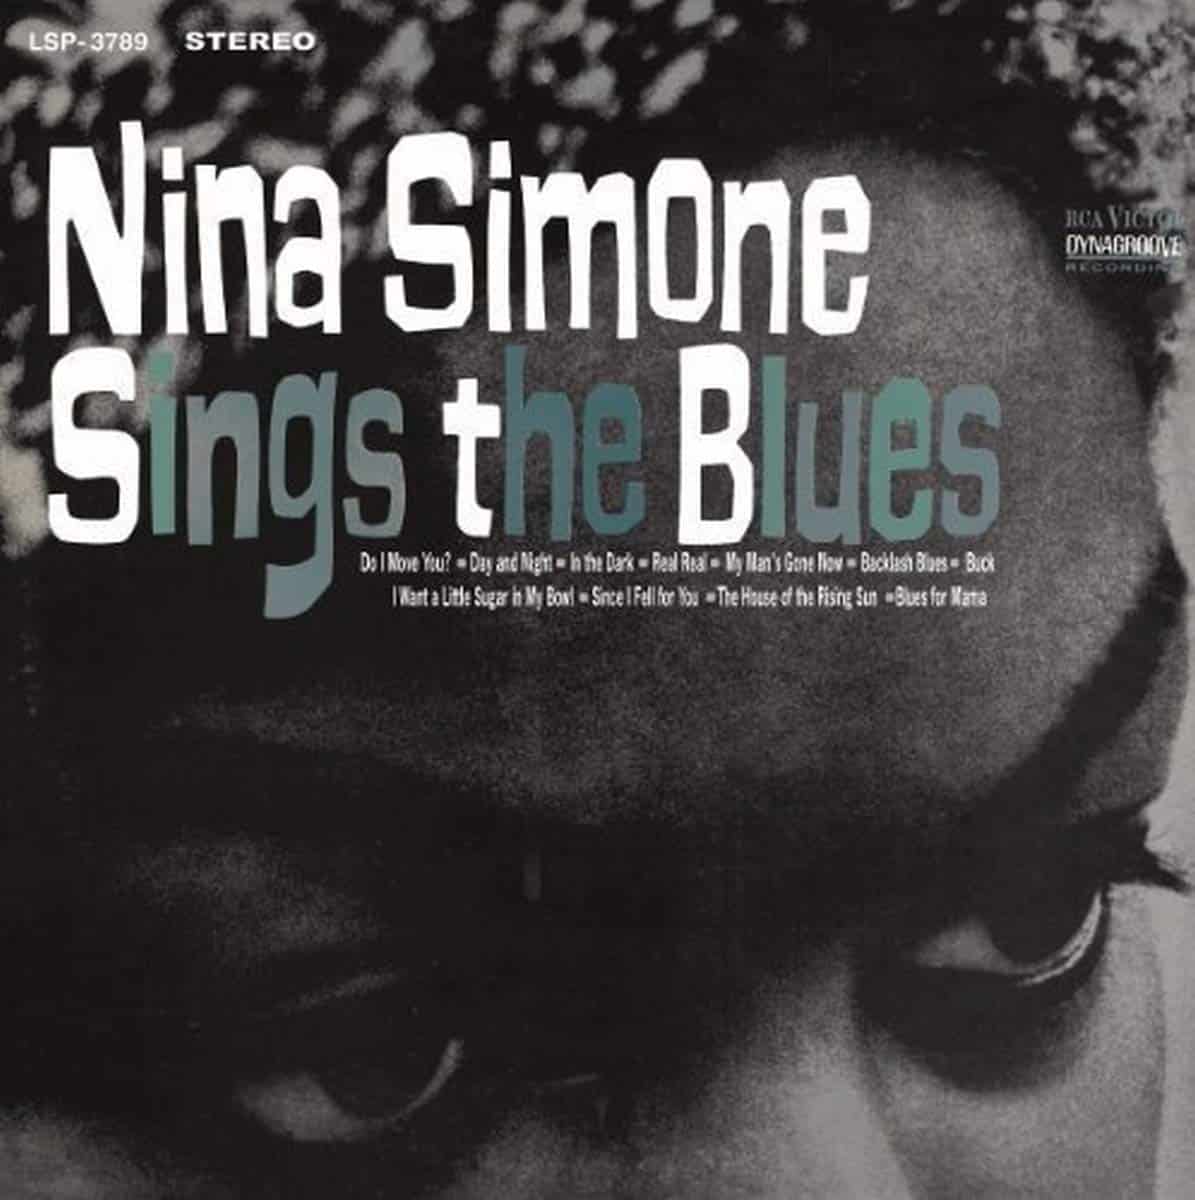 Nina-Simone-Sings-the-Blues-vinyl-LP-record-album-front